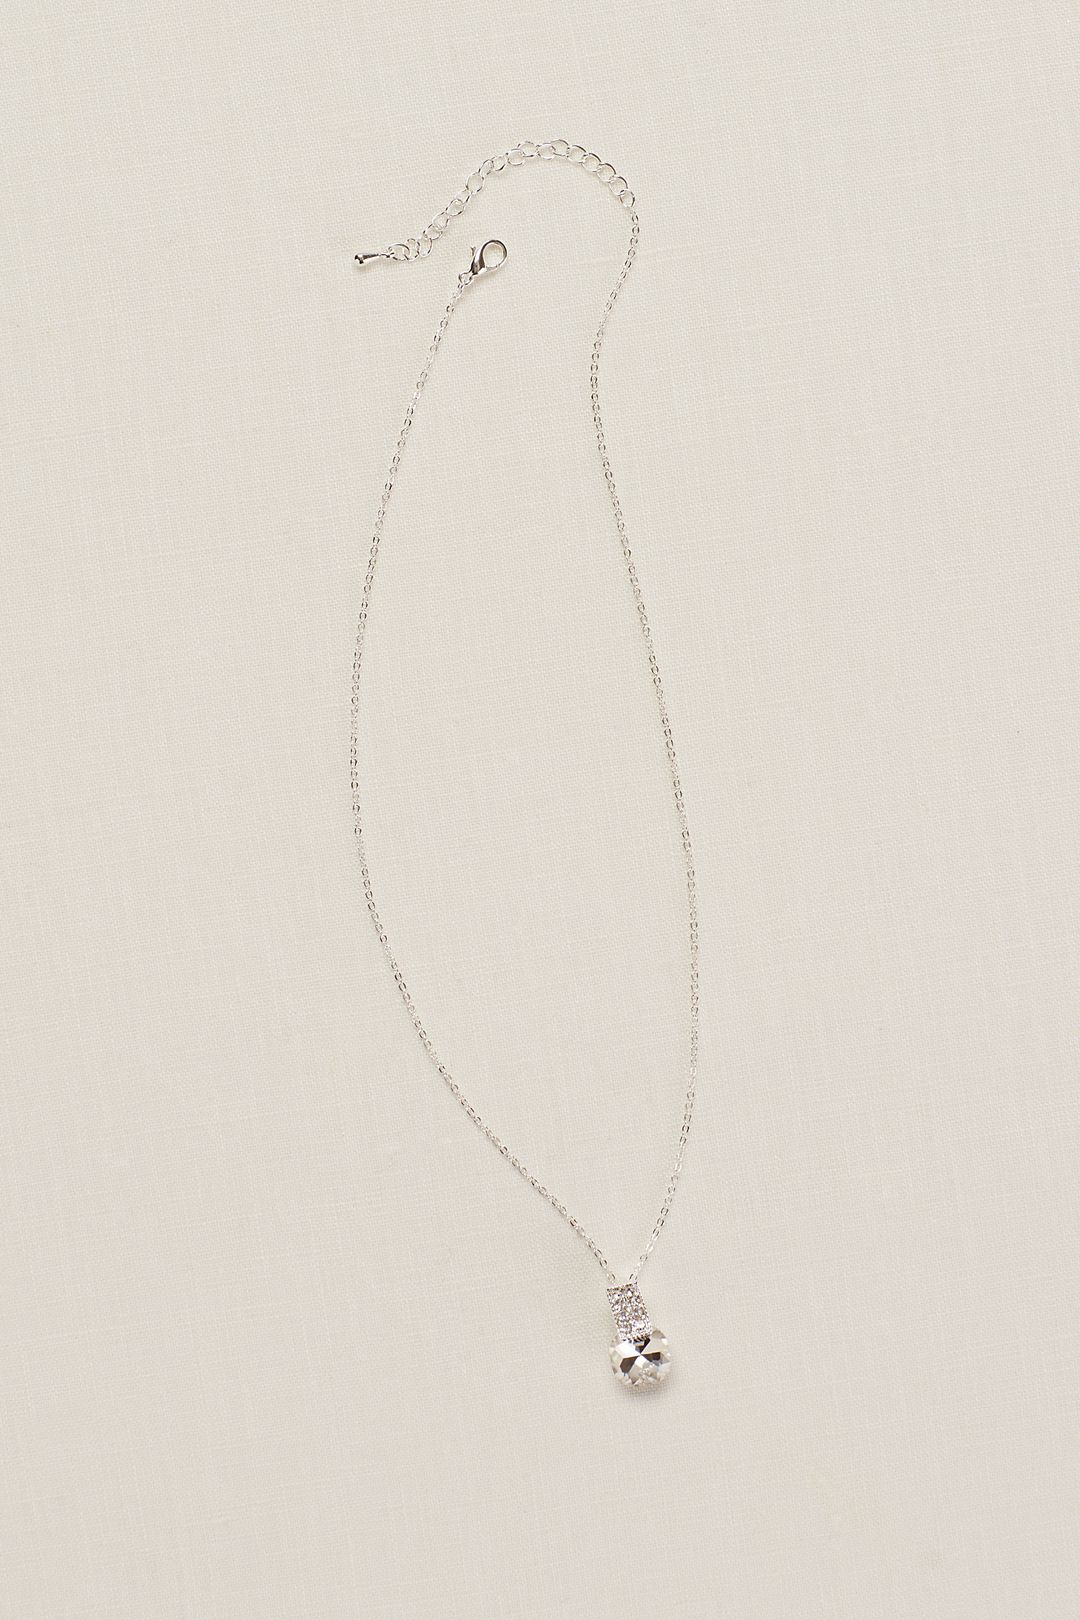 Solitaire and Pave Emblem Pendant Necklace Image 3